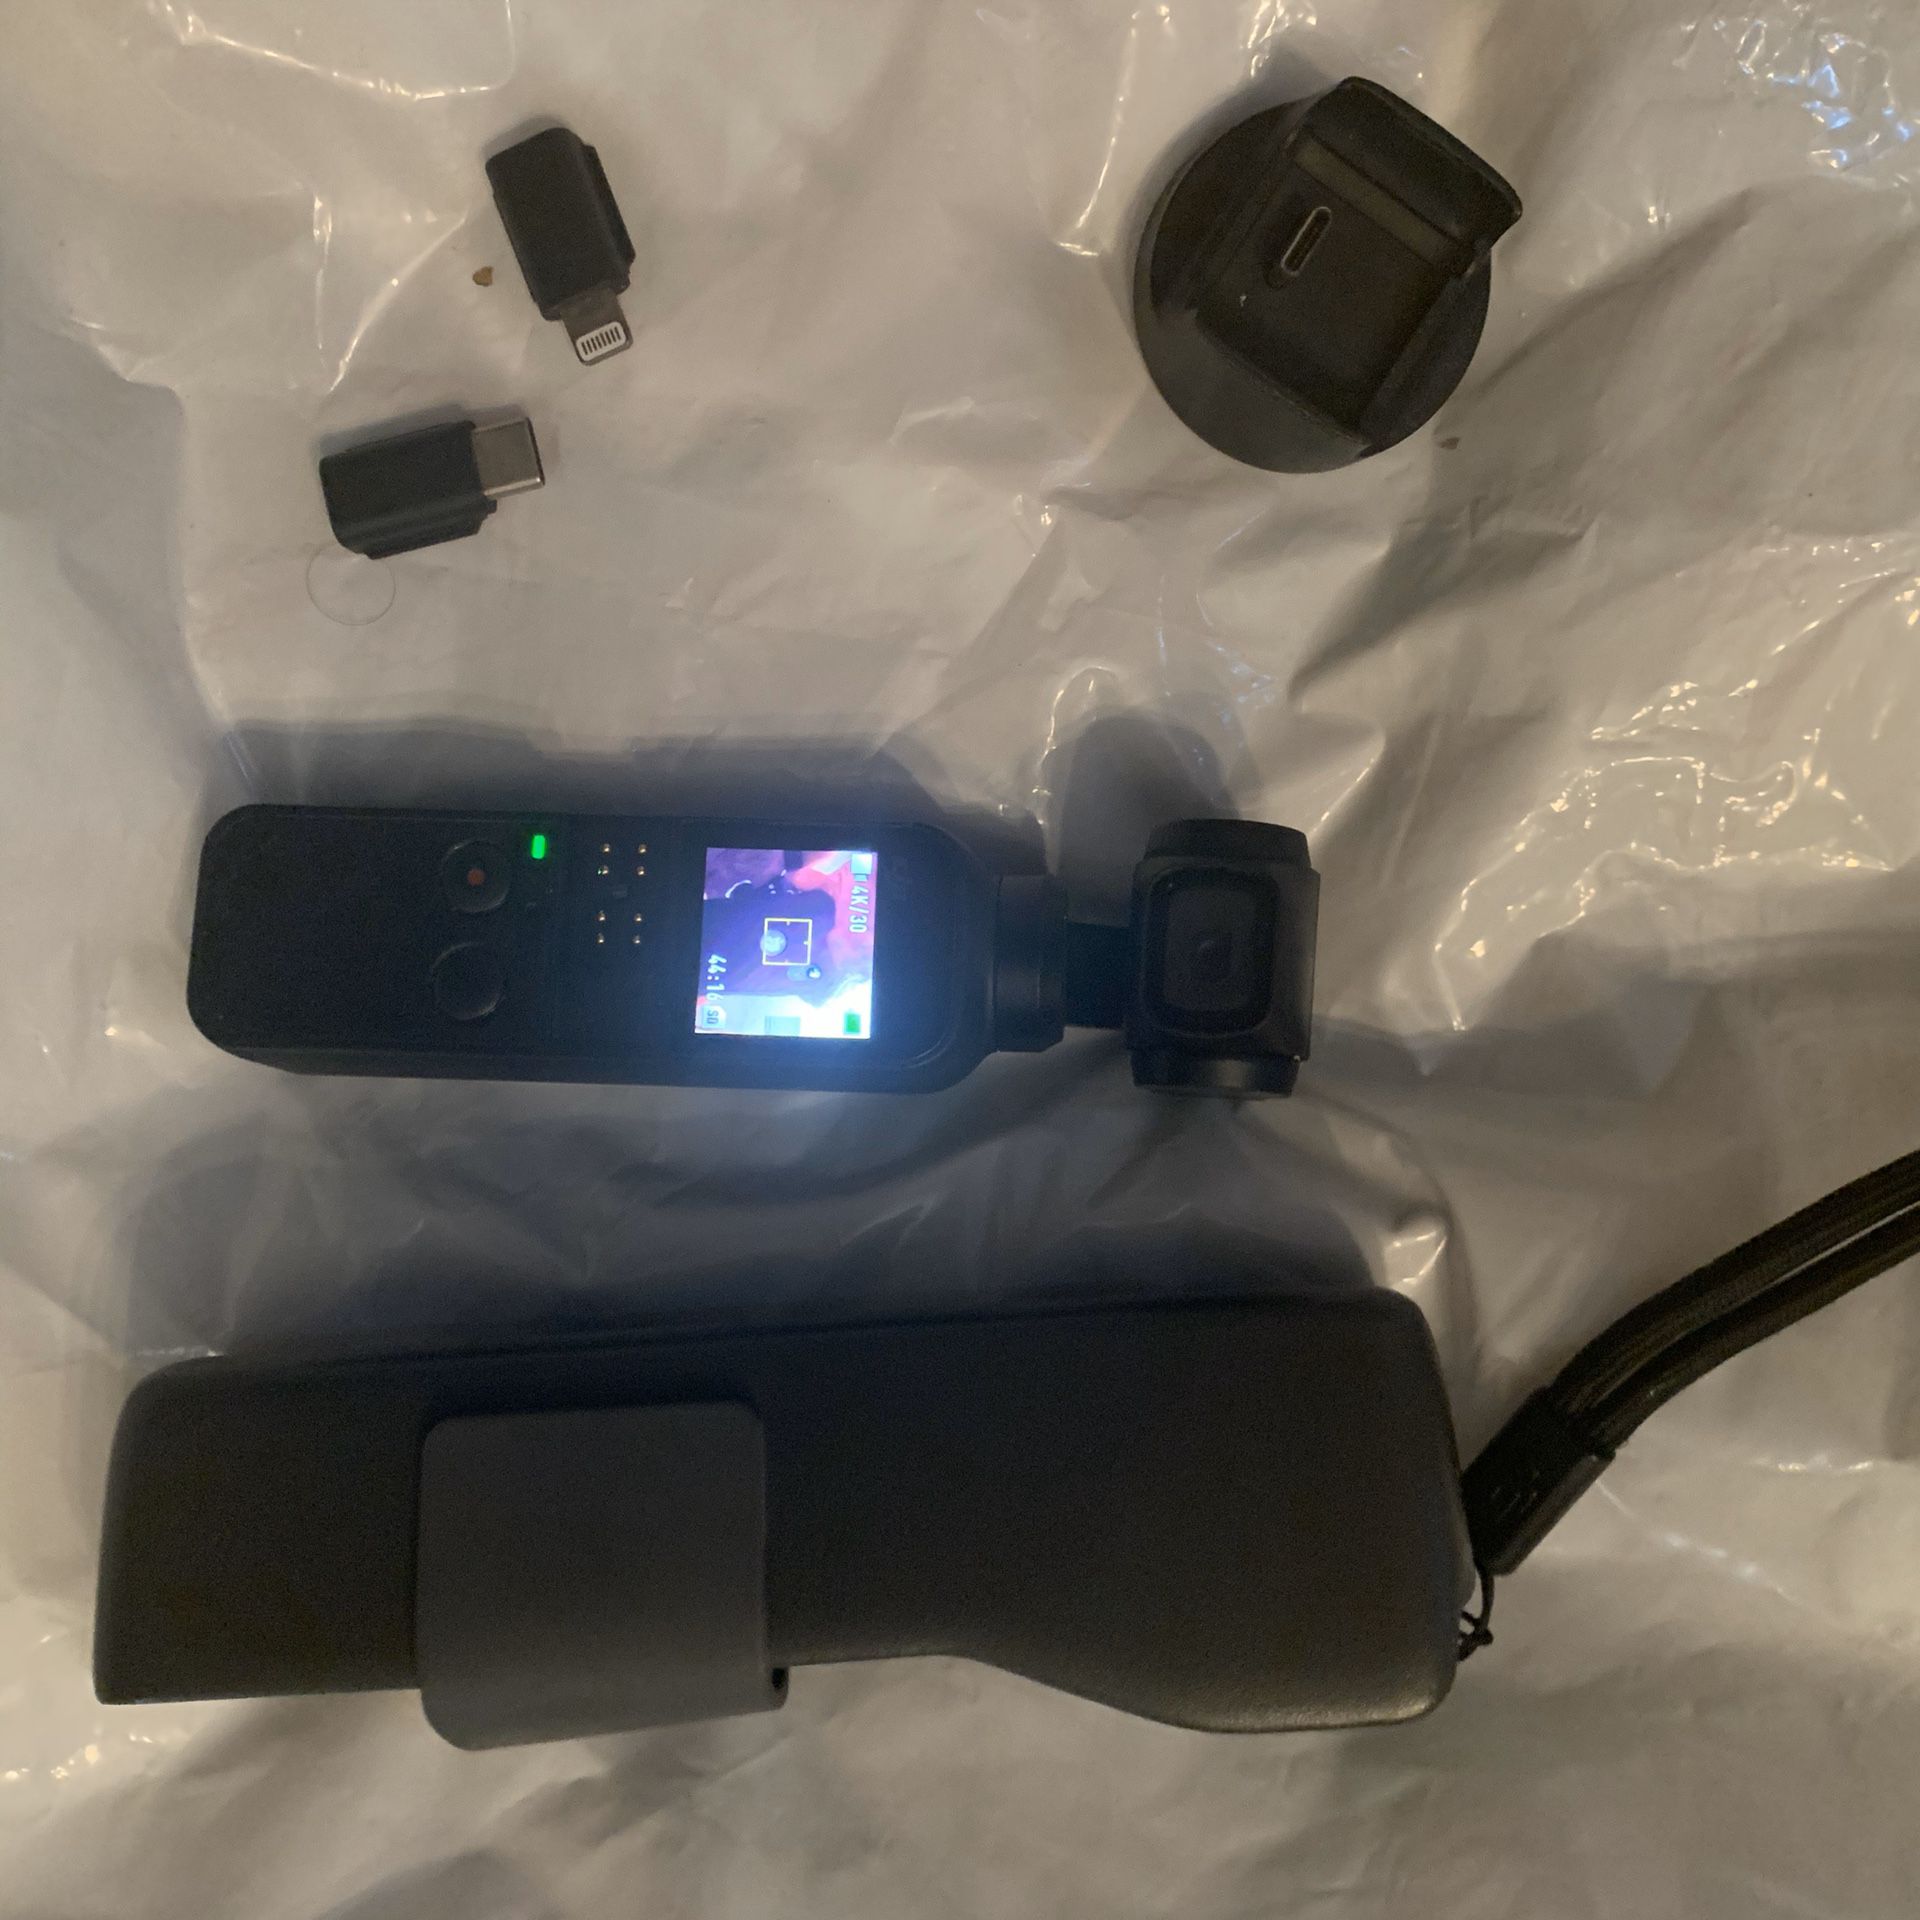 Dji osmo pocket video camera With wireless module